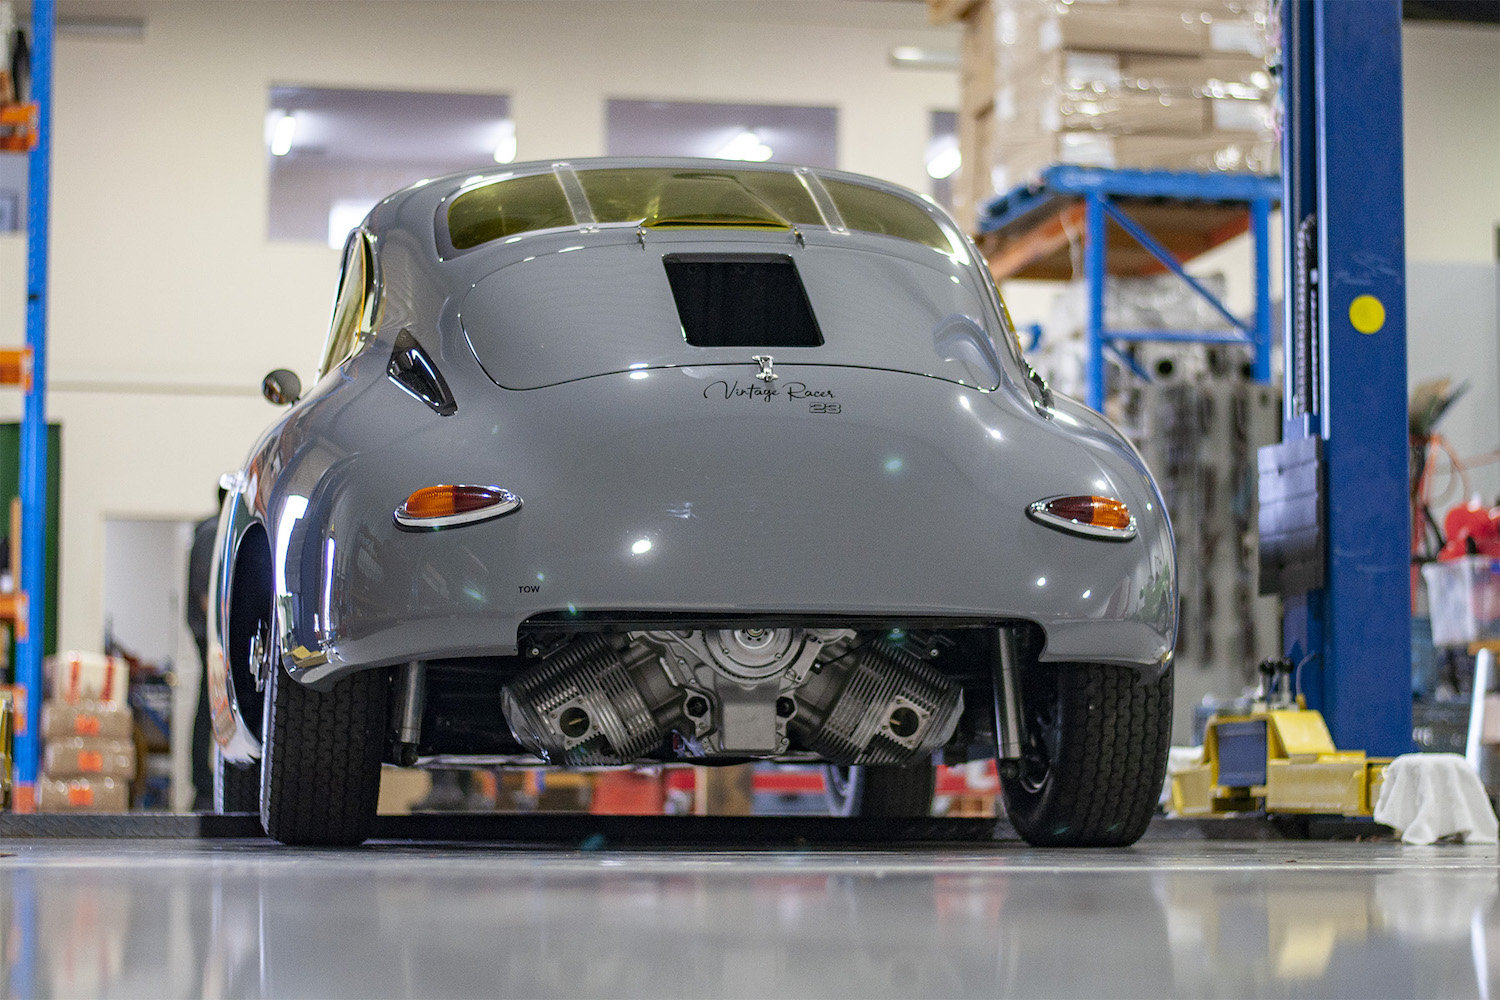 Australian Builds Classic Porsche Powered By An Aeroplane Engine